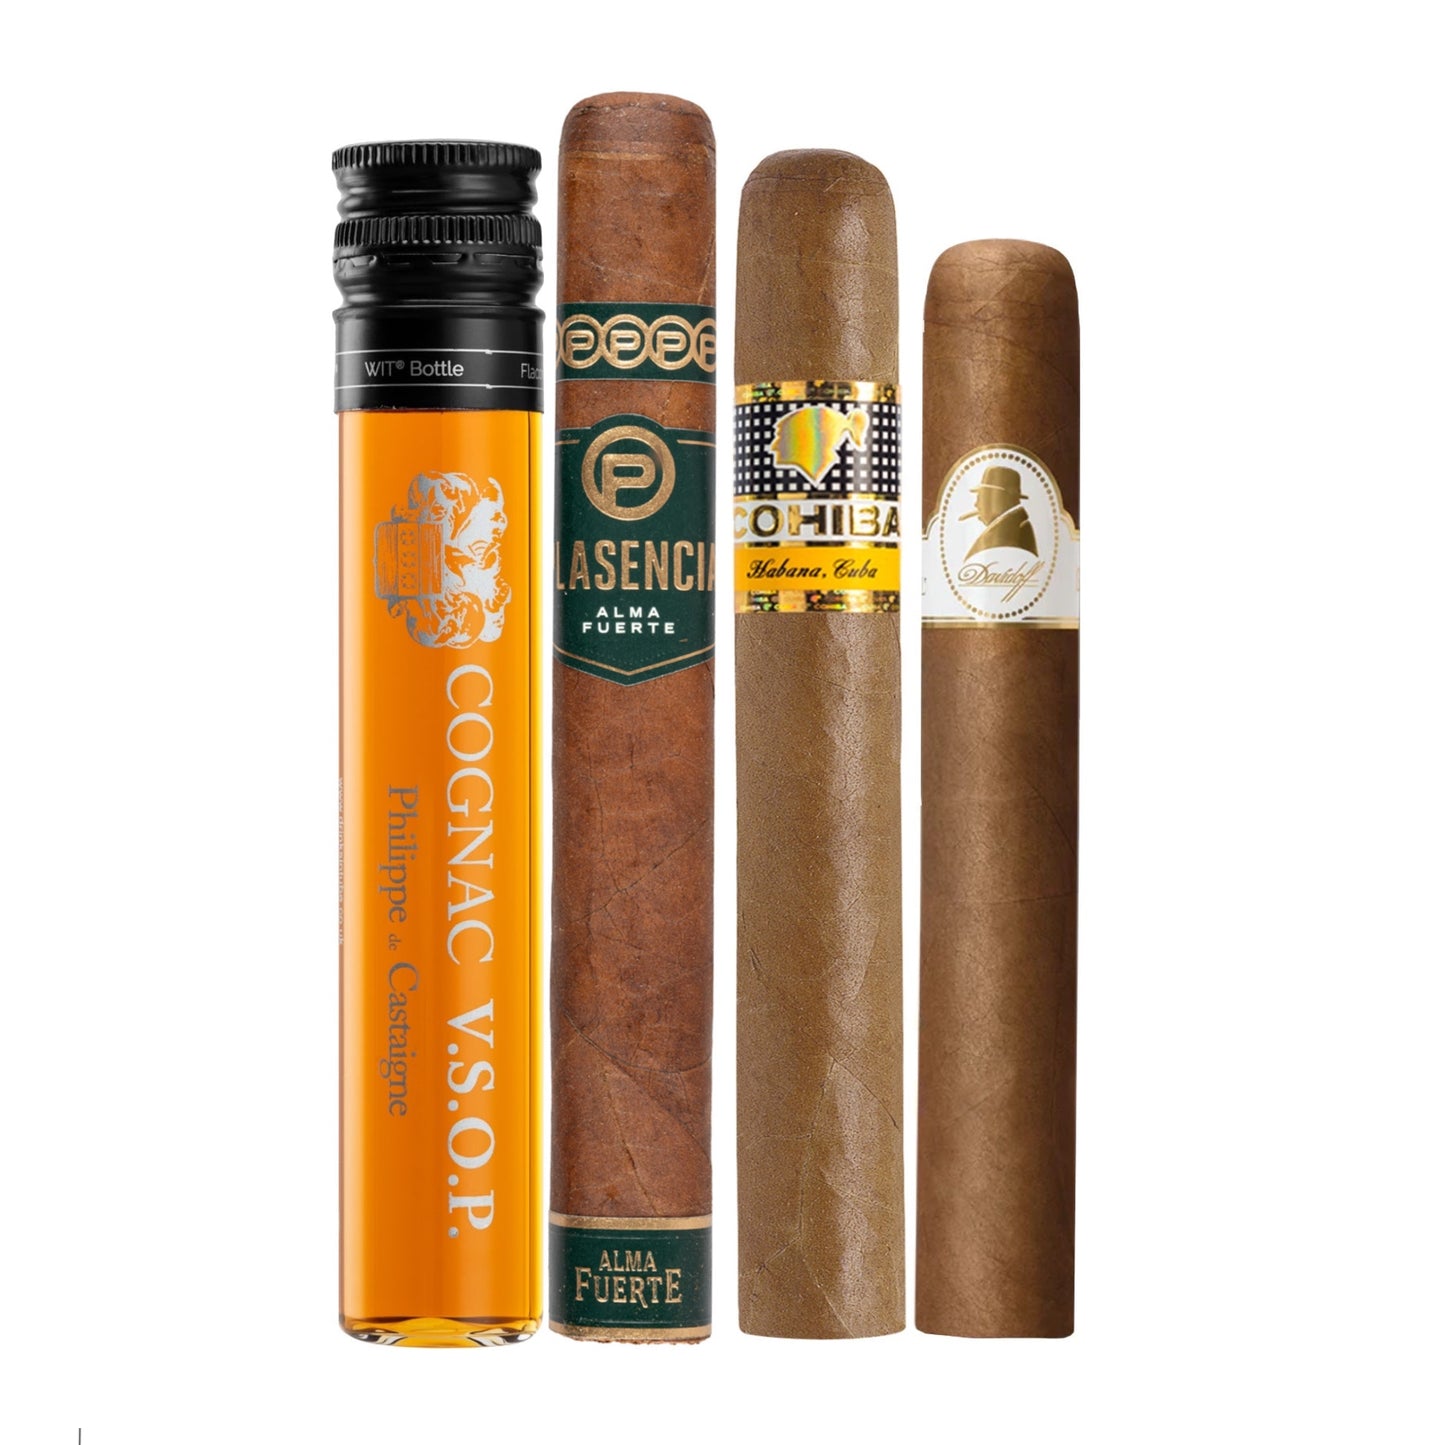 World leader cigar selection